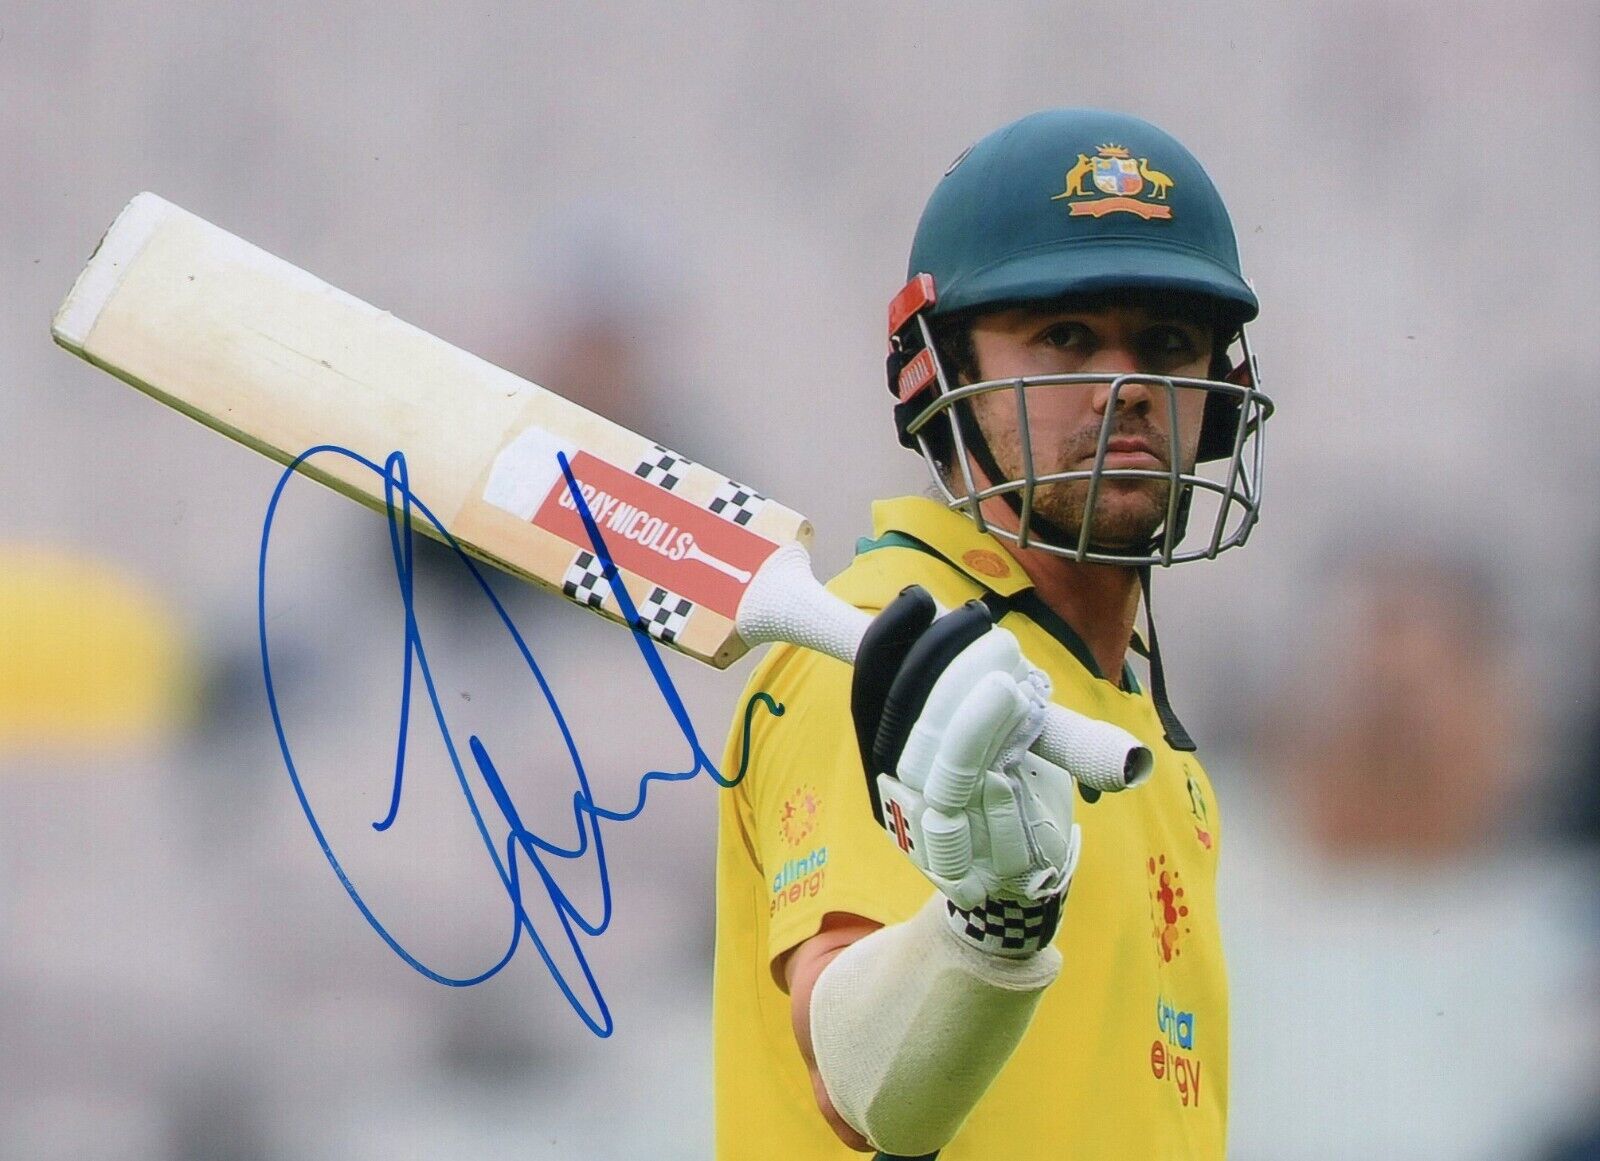 Original Autographed Photo of Australian Cricketer Travis Head